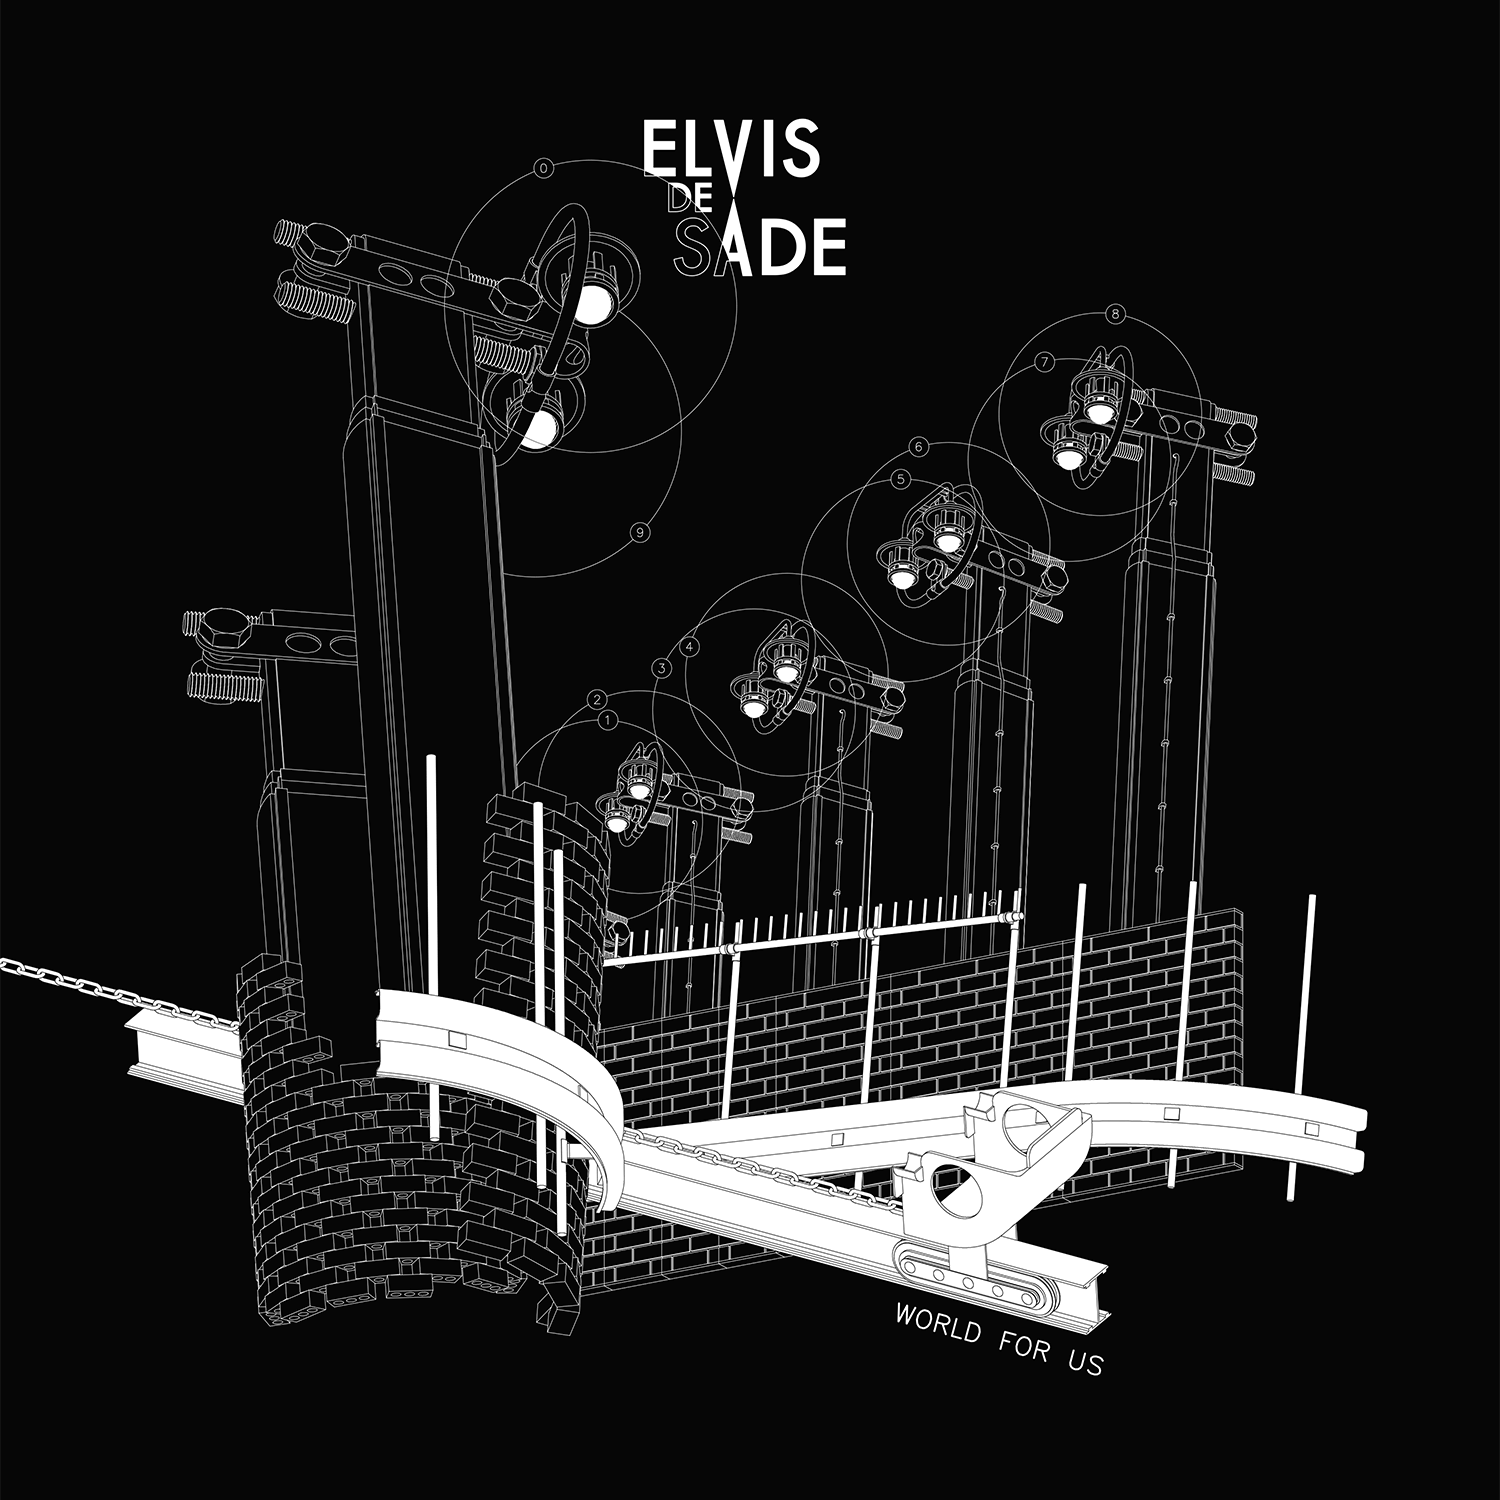 Elvis de Sade’s World For Us is a New Post Punk Album